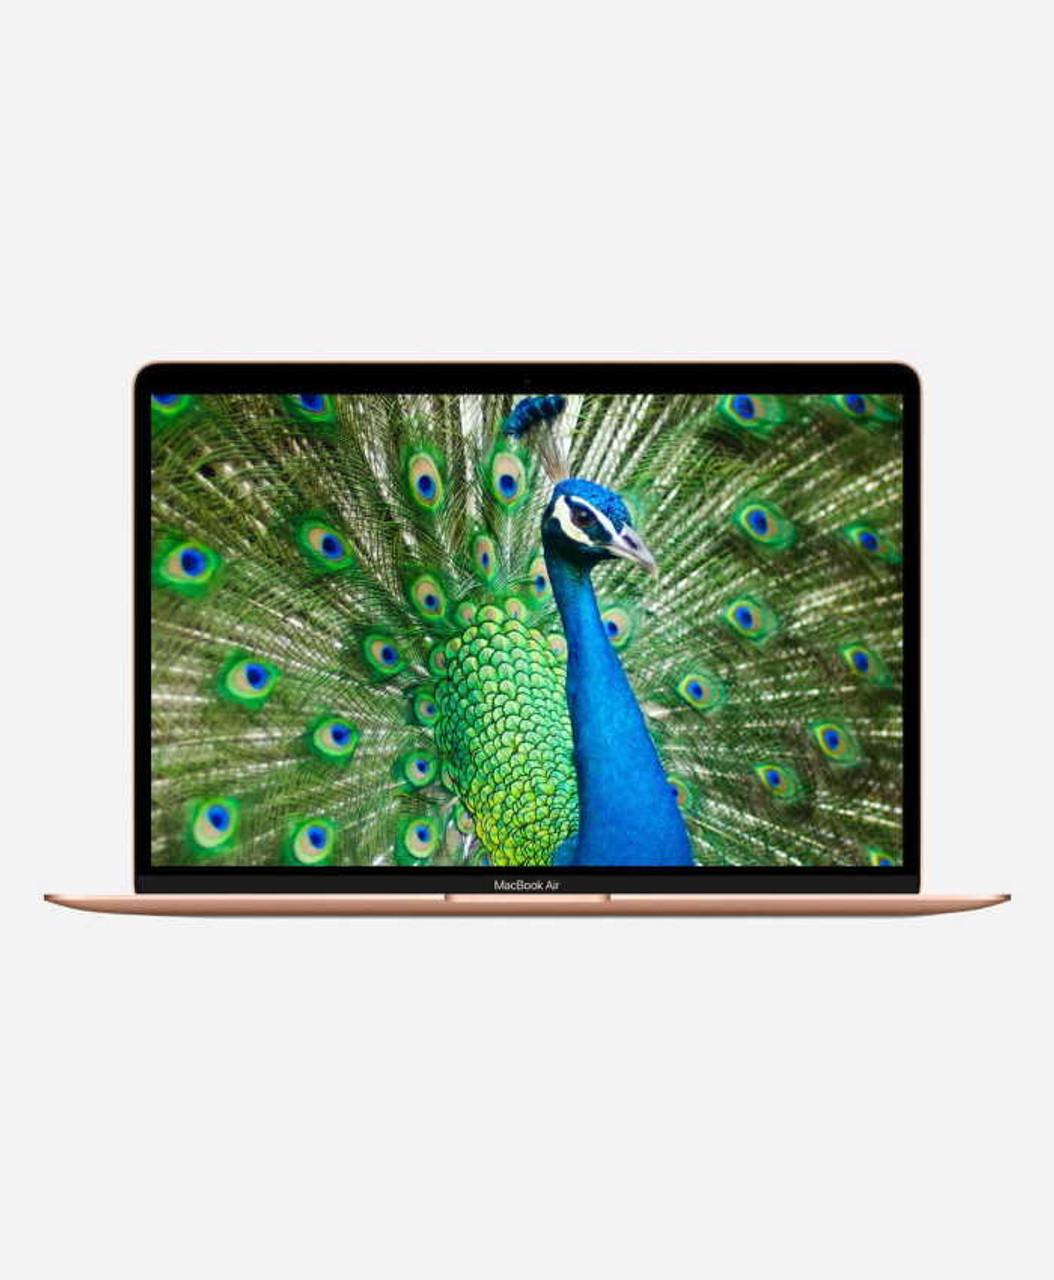 Refurbished Apple Macbook Air 13.3-inch (Retina, Gold) 1.2GHZ Quad 